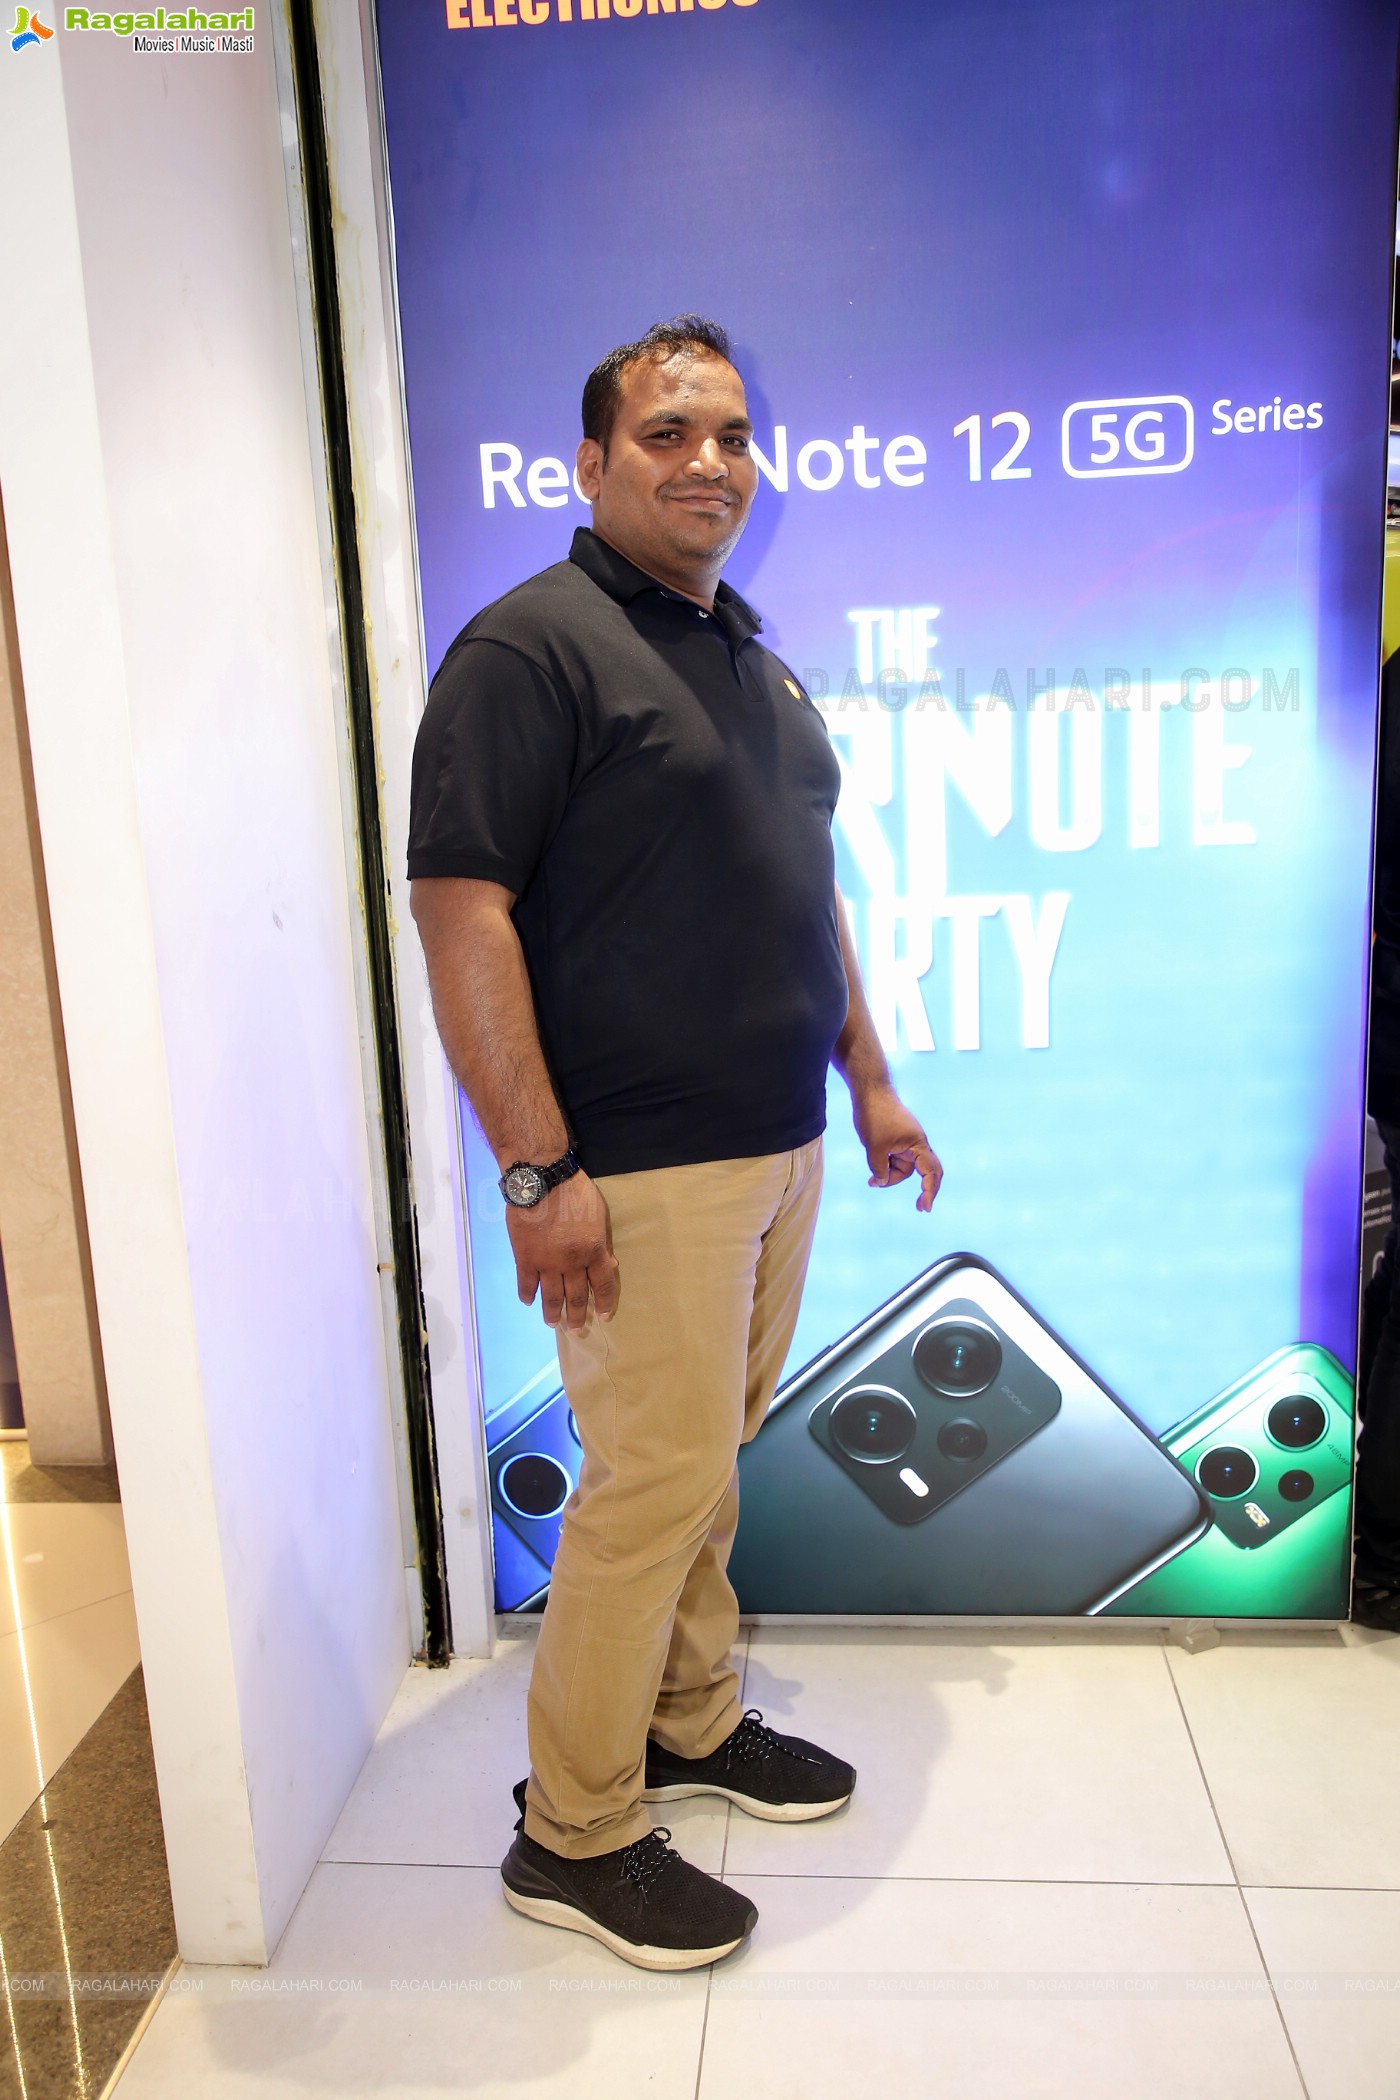 Redmi Note 12 5G Series Launch at Bajaj Electronics, Inorbit Mall